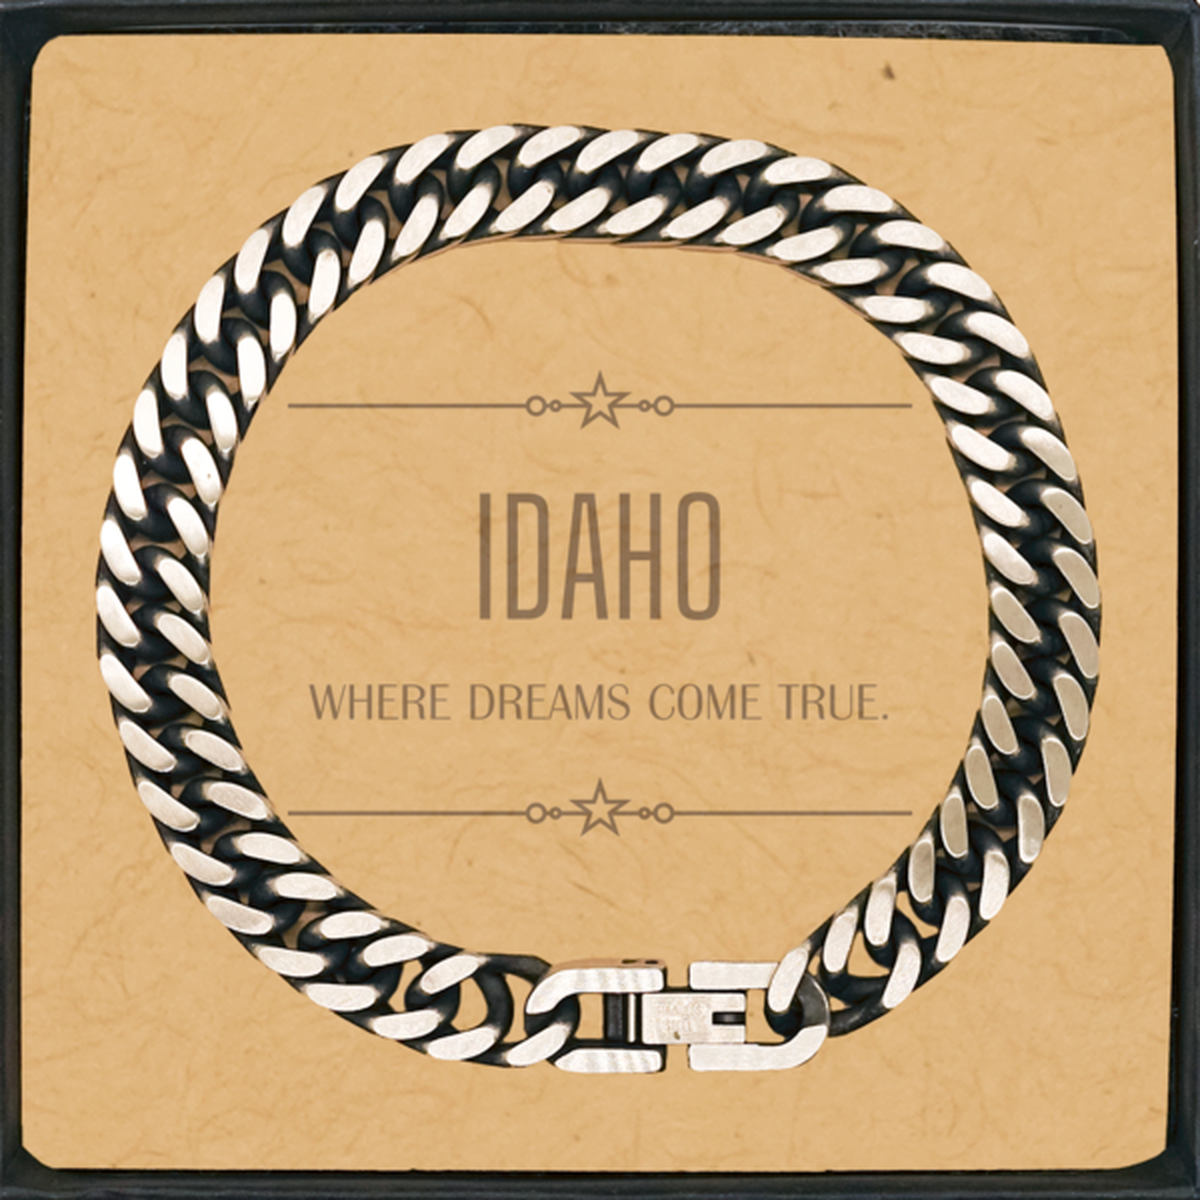 Love Idaho State Cuban Link Chain Bracelet, Idaho Where dreams come true, Birthday Inspirational Gifts For Idaho Men, Women, Friends